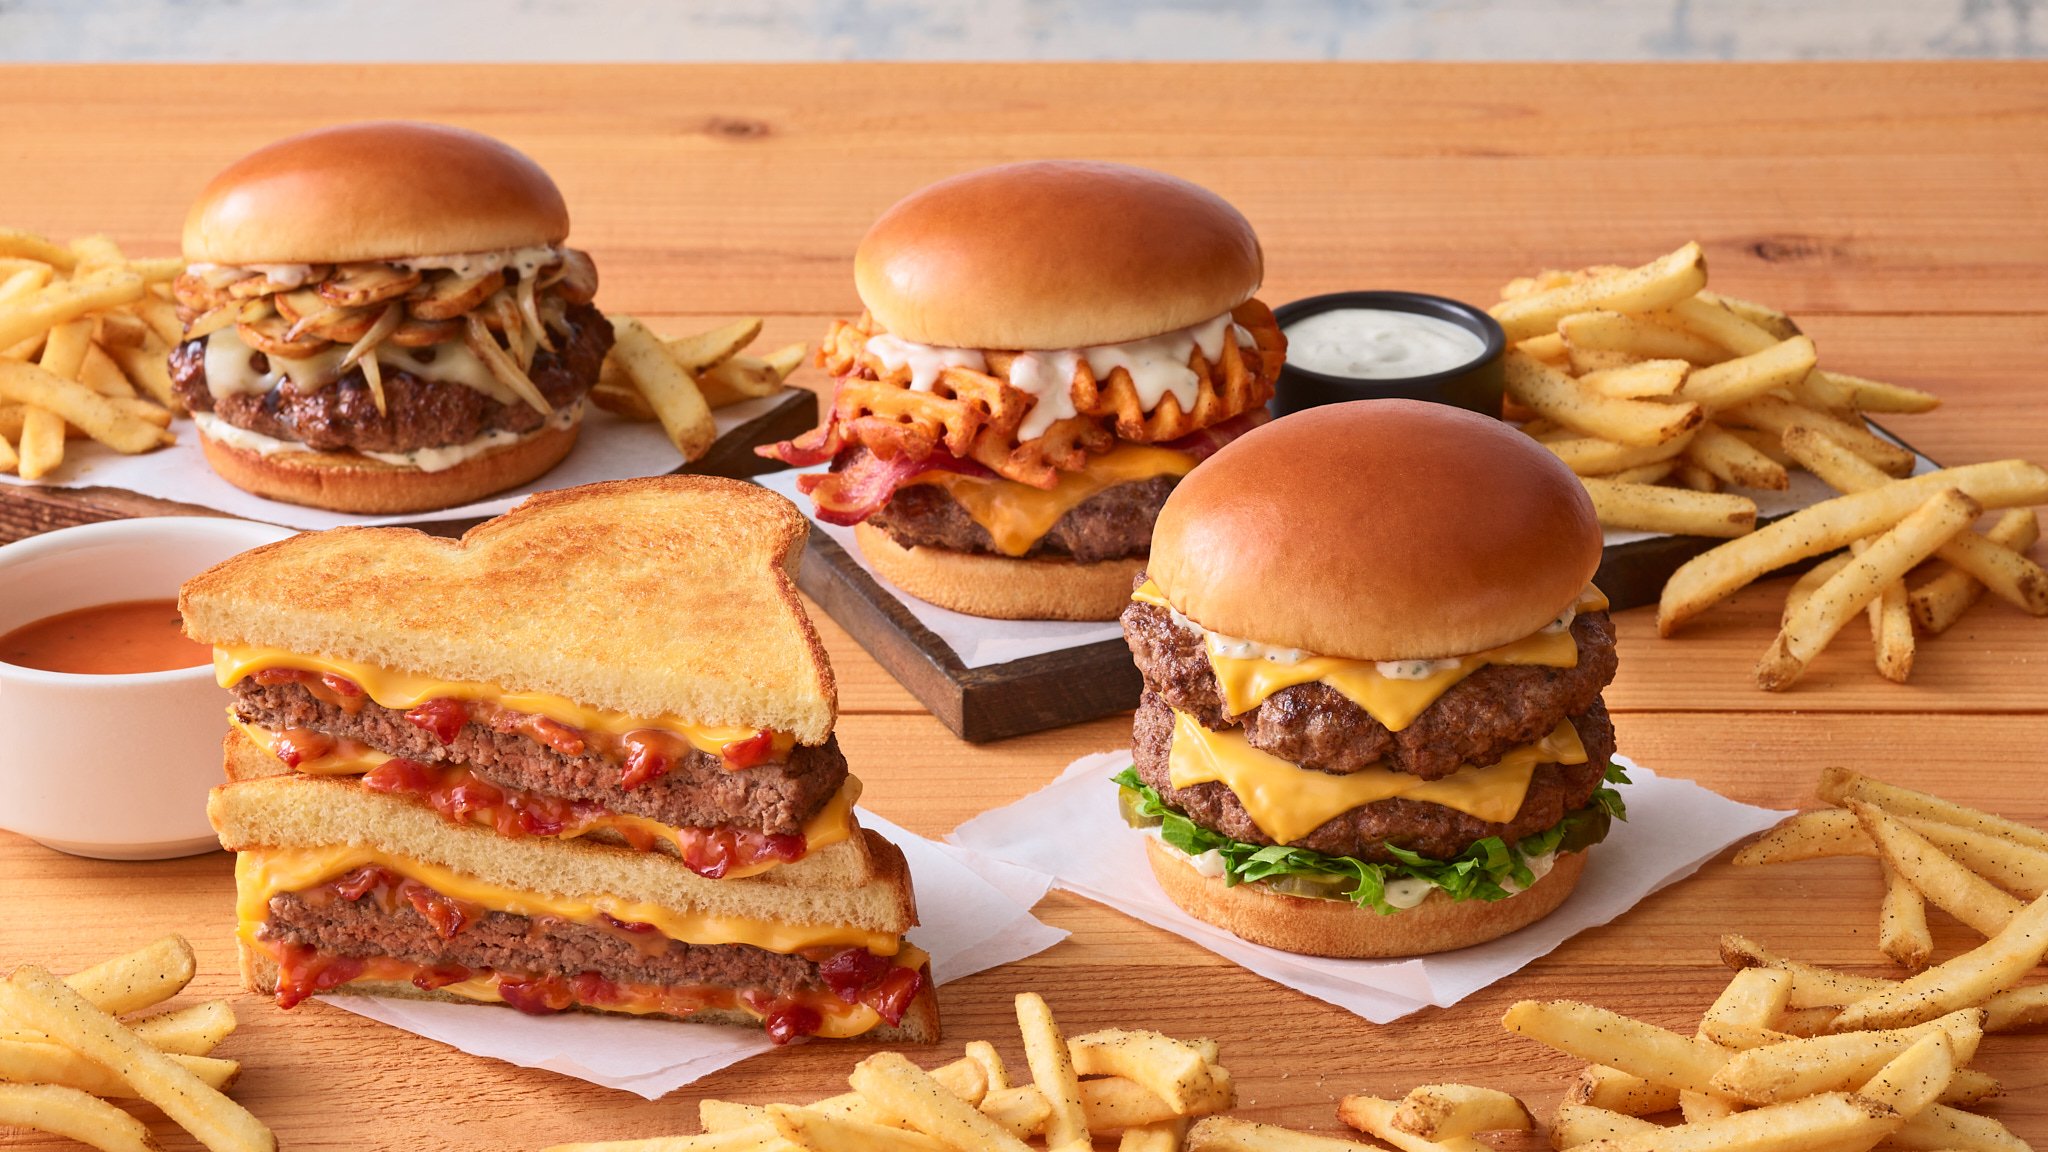 1A-Breadth-Shot-Bourbon-Street-Mushroom-Swiss-Burger-Loaded-Waffle-Fries-Burger-Grilled-Cheese-Cheeseburger-Neighborhood-Burger-2-and-Fries-0033-R2-V1.jpg